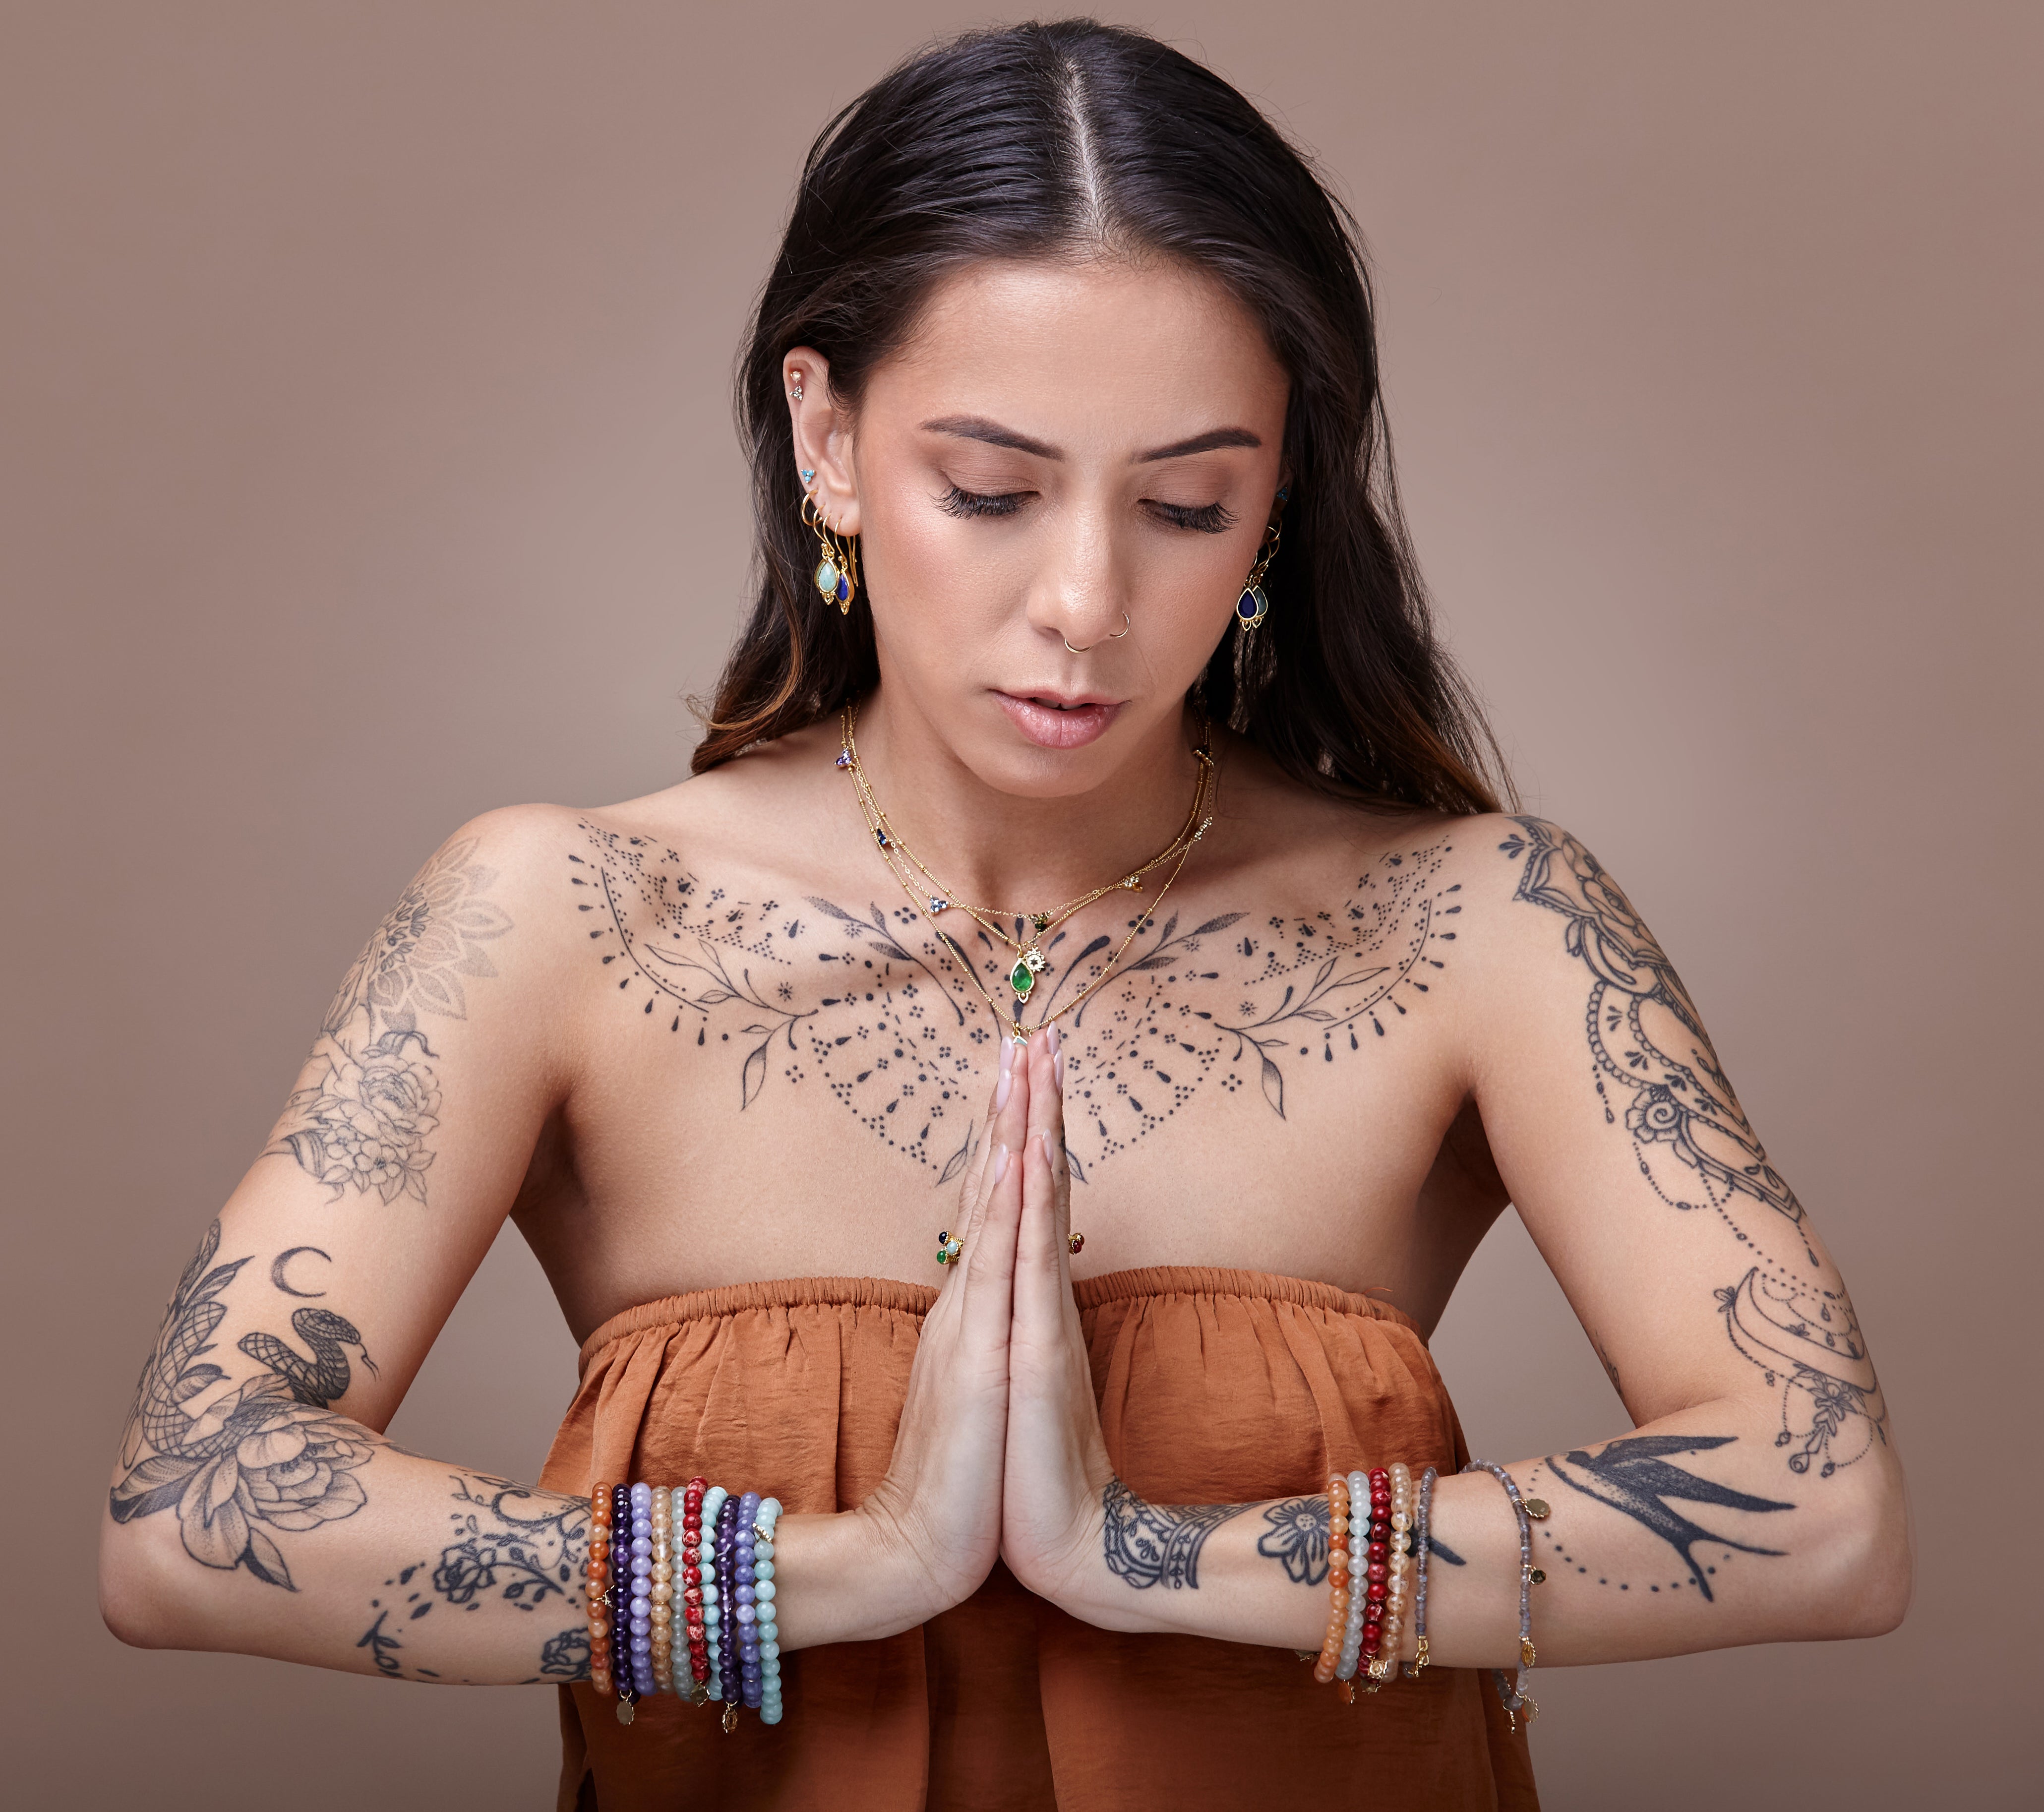 Throat Chakra Spiritual Yoga Crystal Jewellery NZ